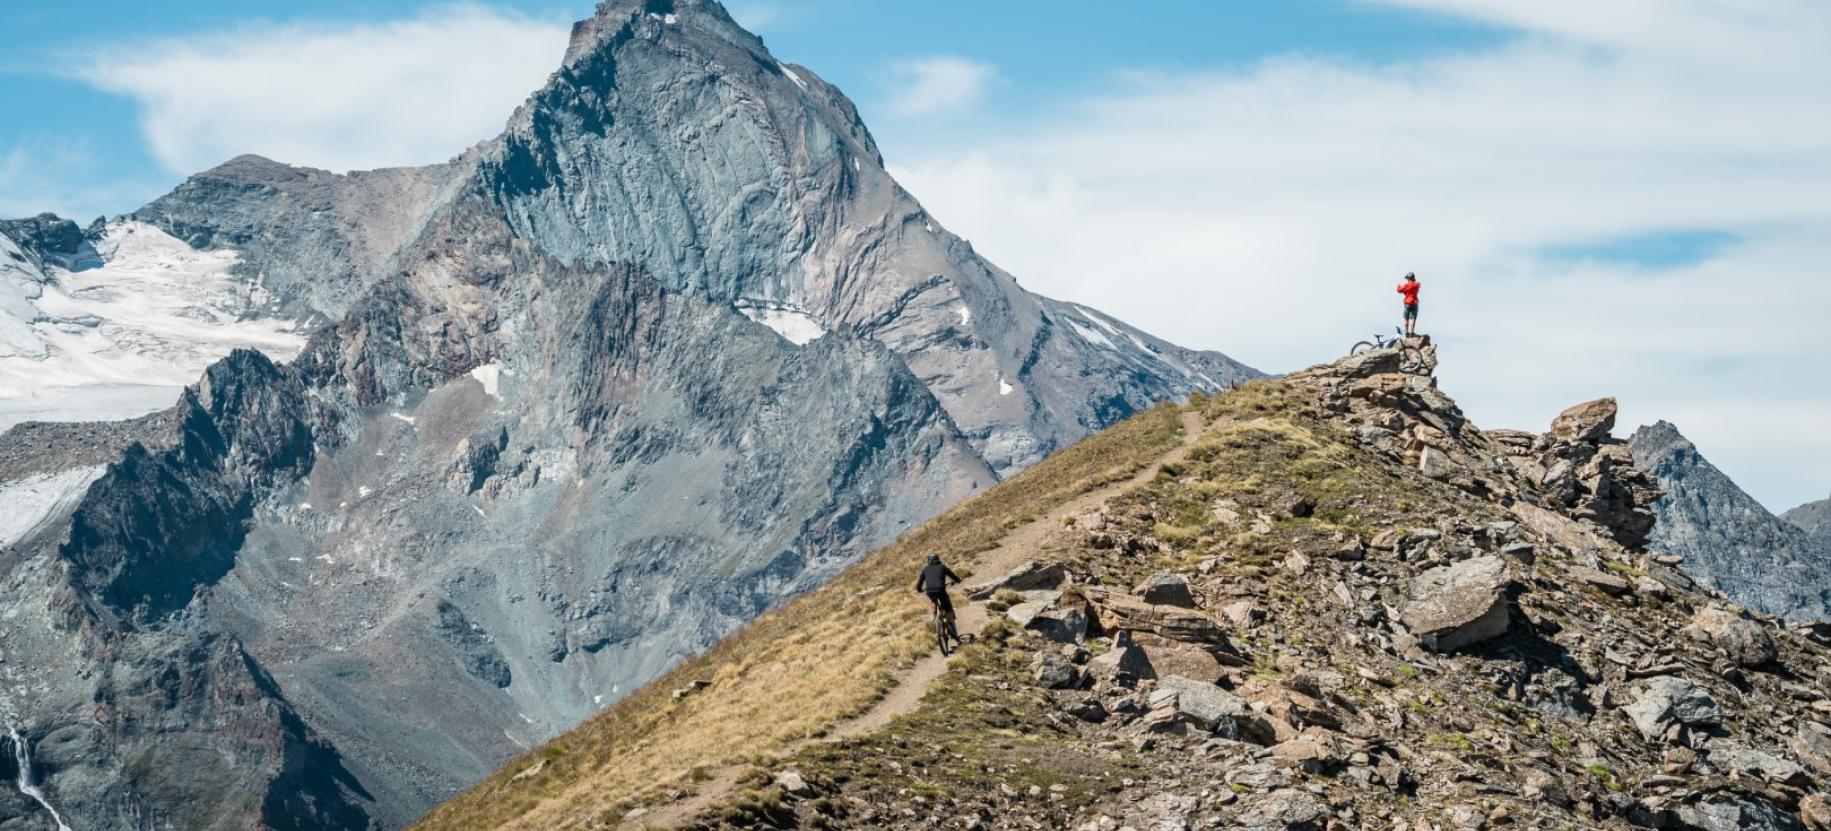 All Around eMTB - e-MTB race around Aosta Valley